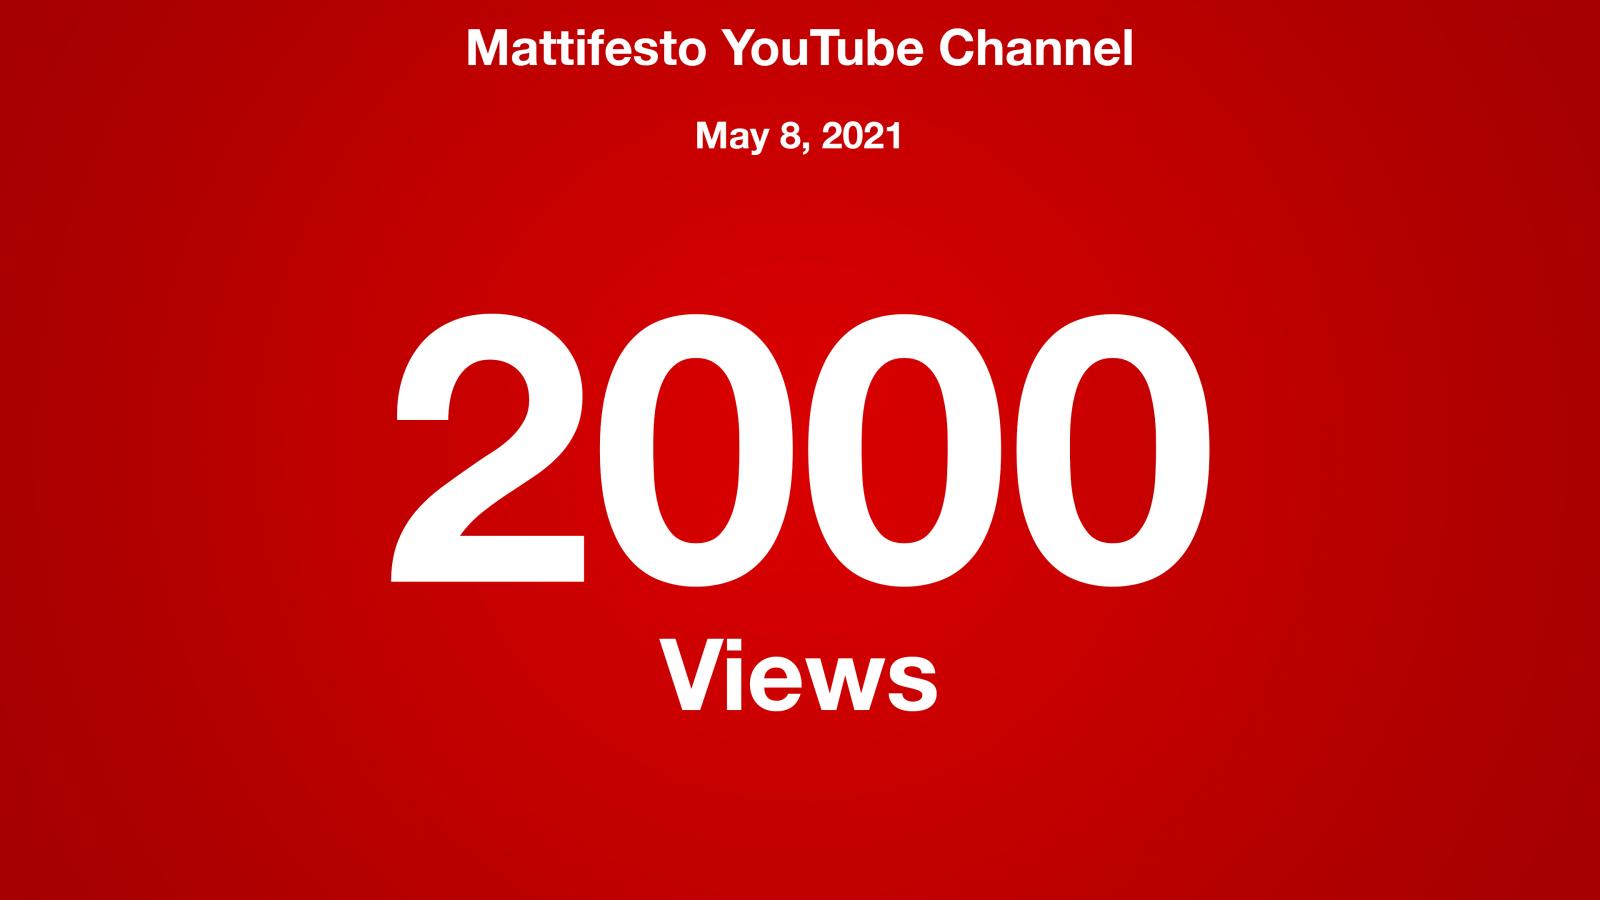 Mattifesto YouTube Channel, May 8 2021, 2000 Views